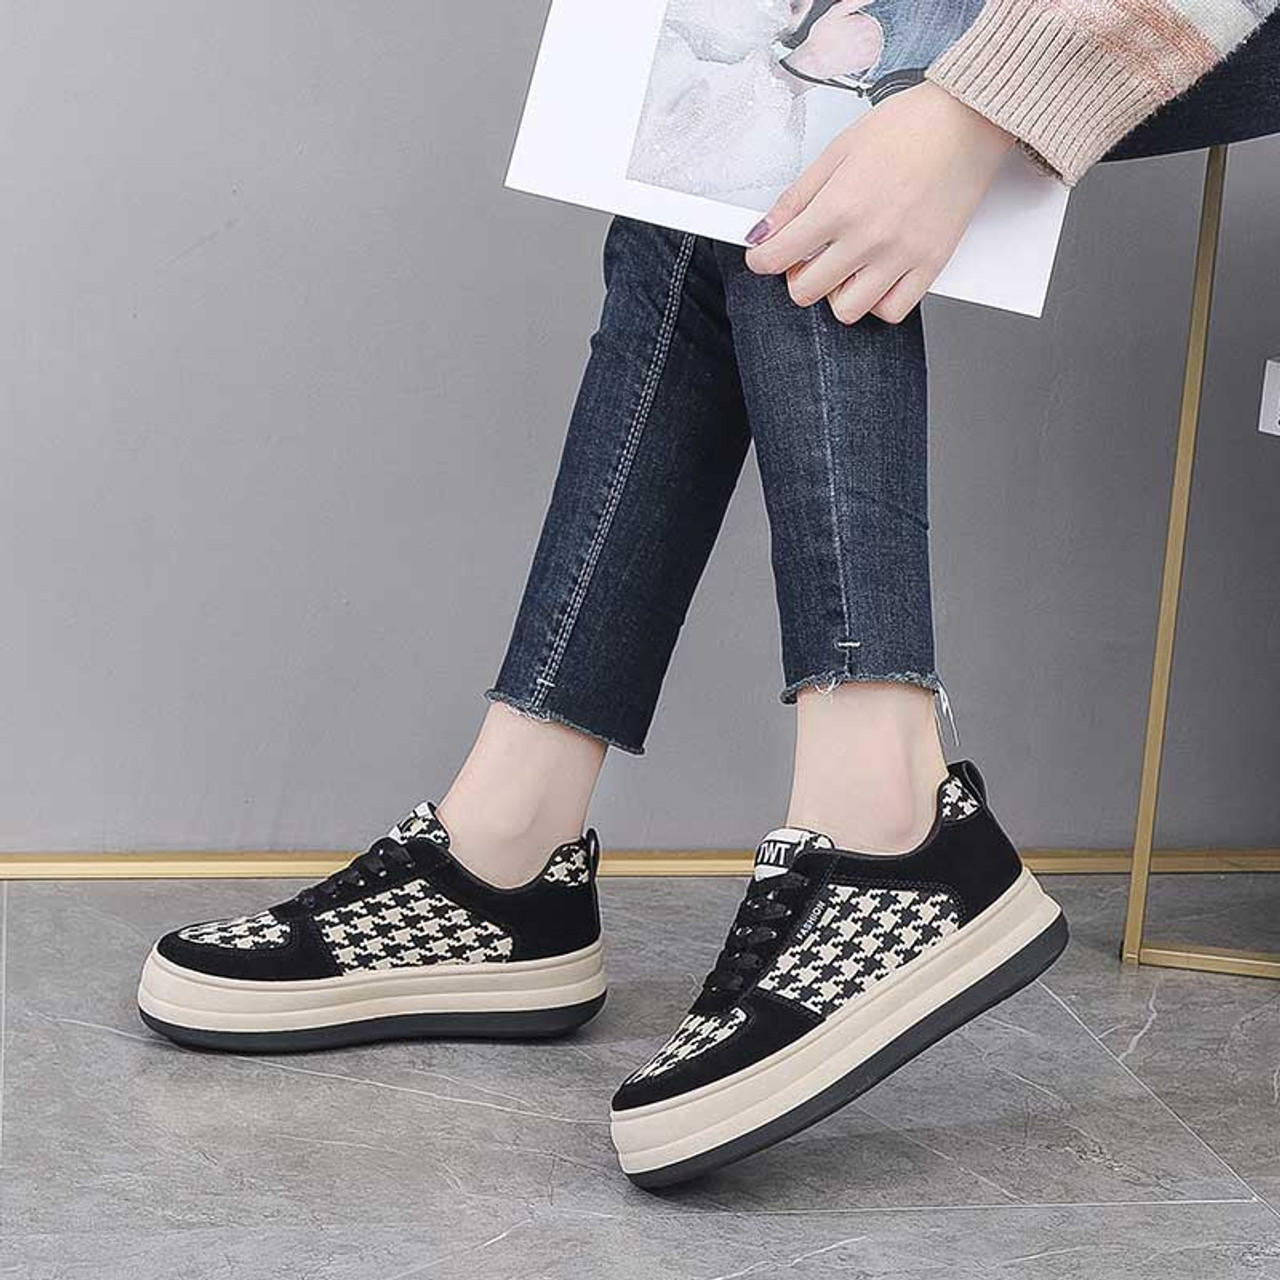 Black chidori pattern lace up shoe sneaker | Womens sneakers shoes ...